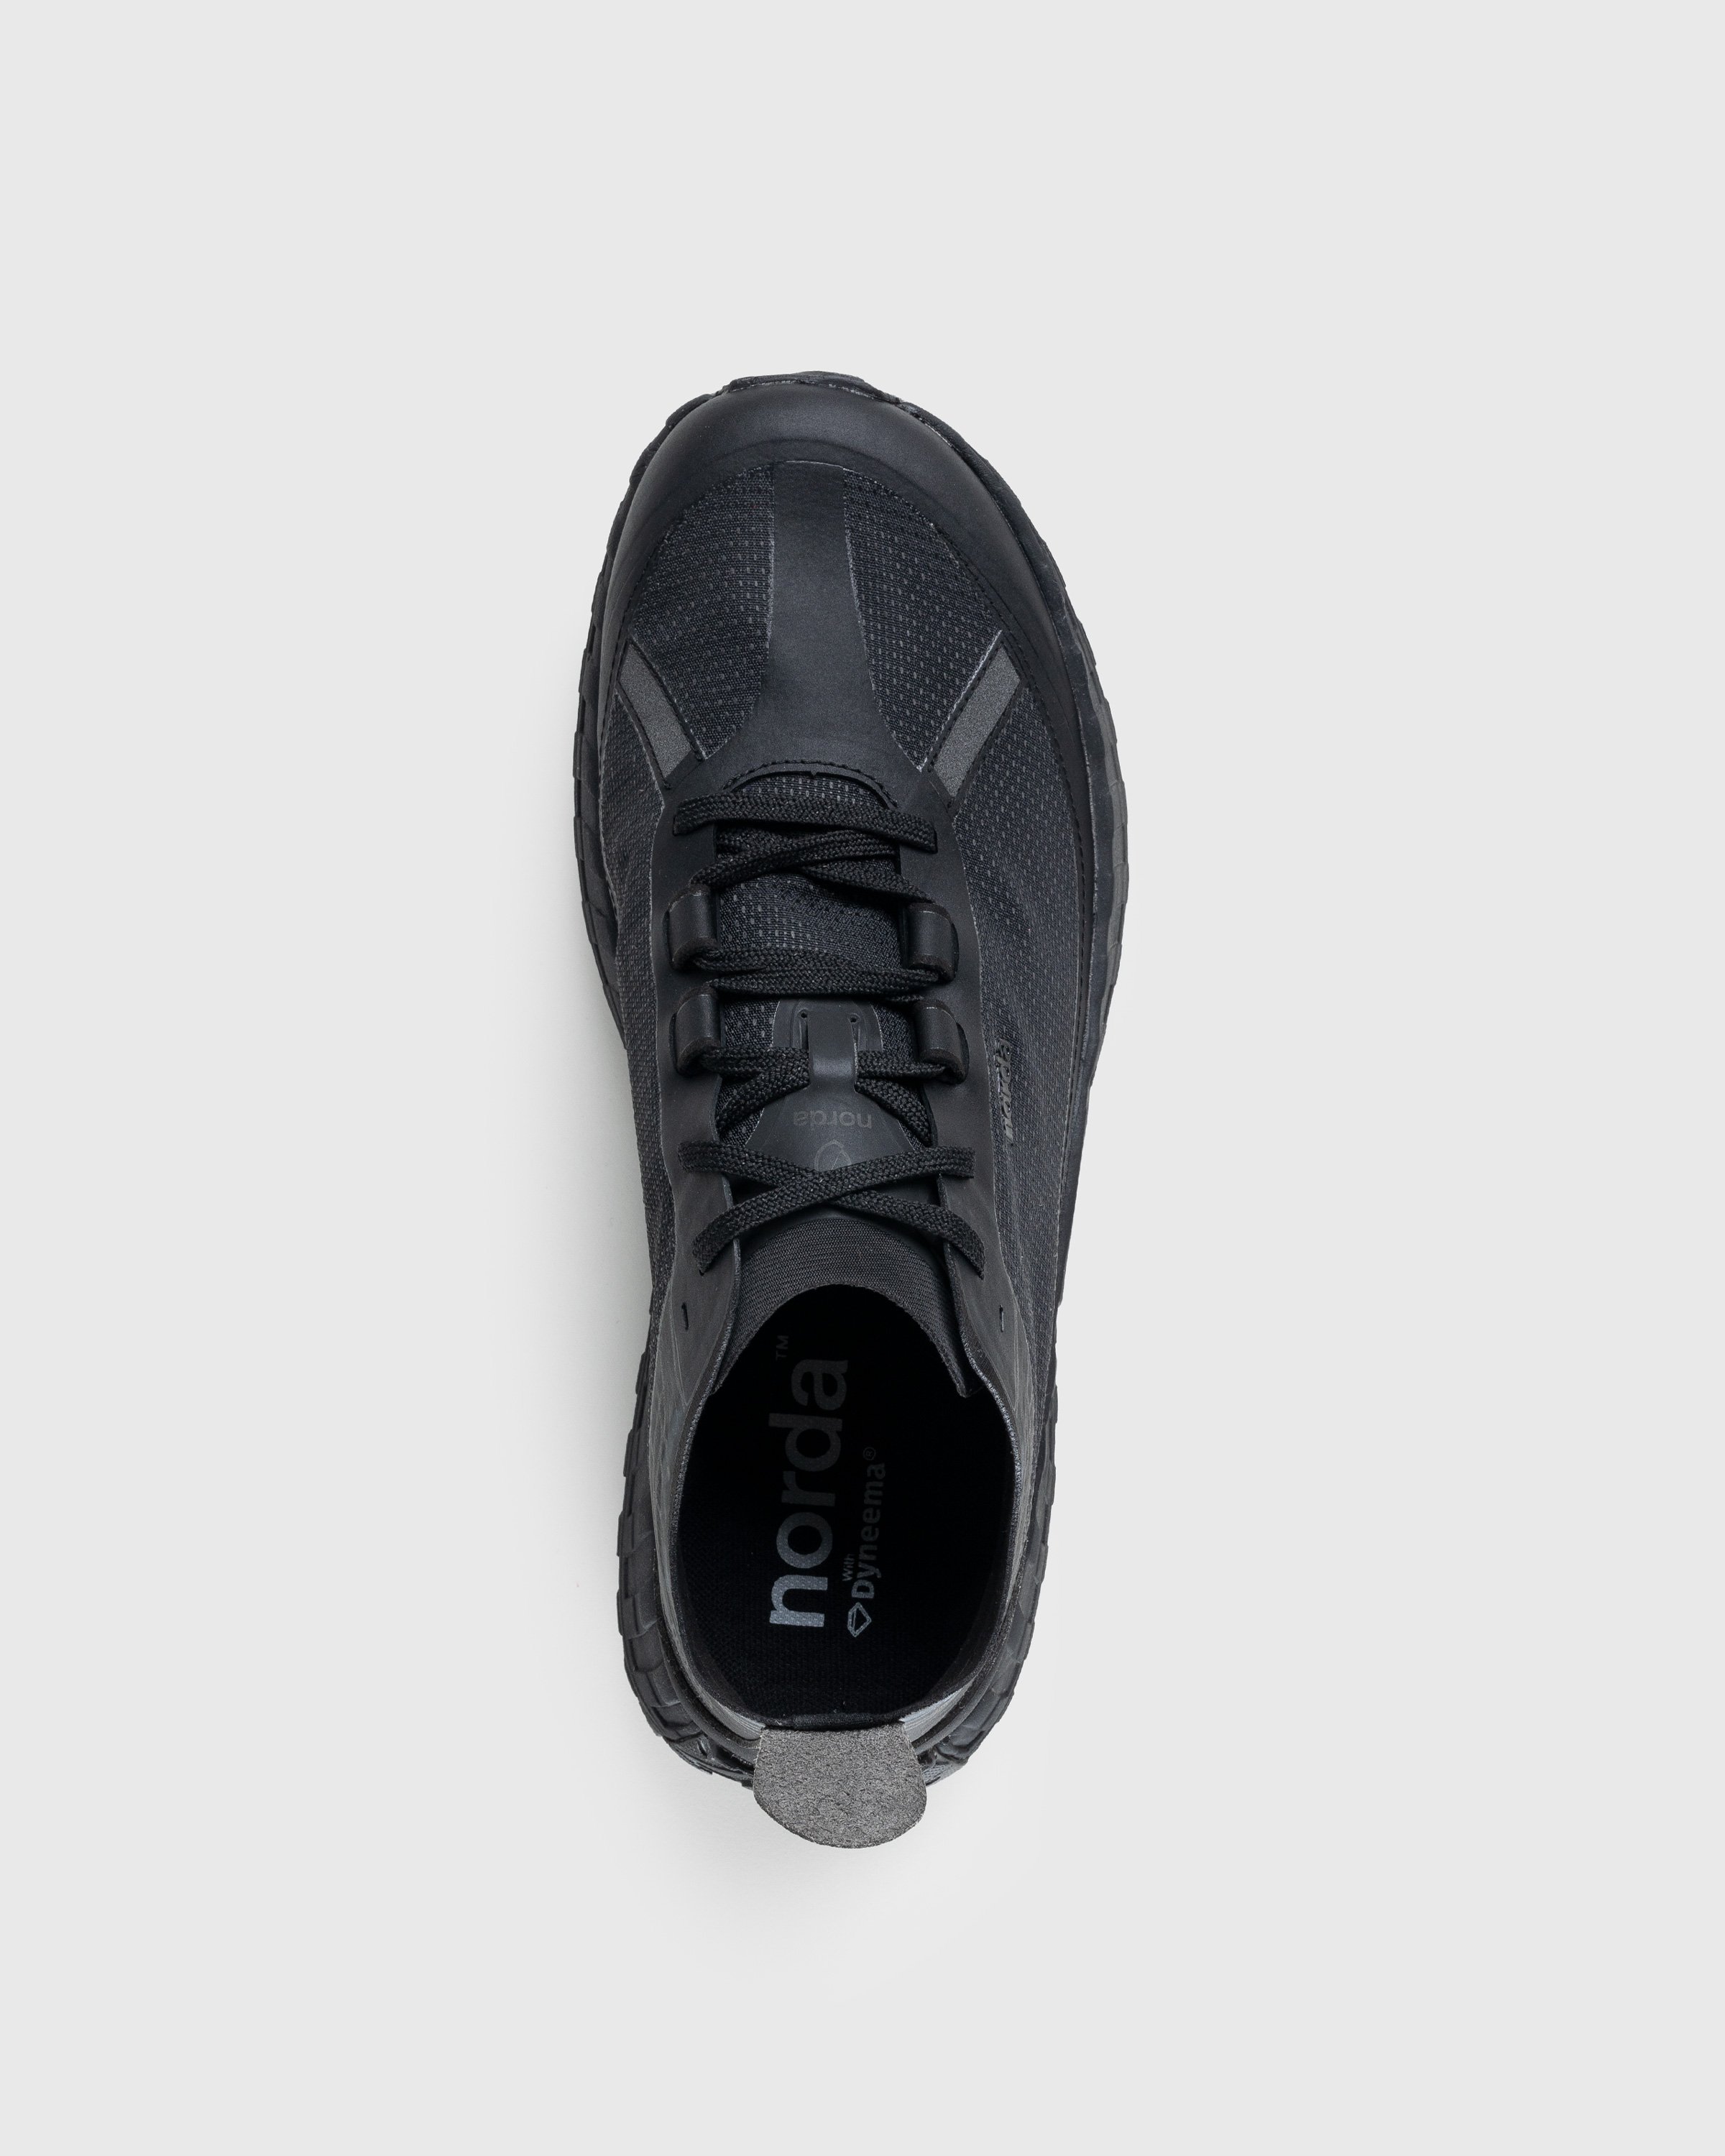 Norda - 001 LTD Edition G+ Graphene Black - Footwear - Black - Image 5